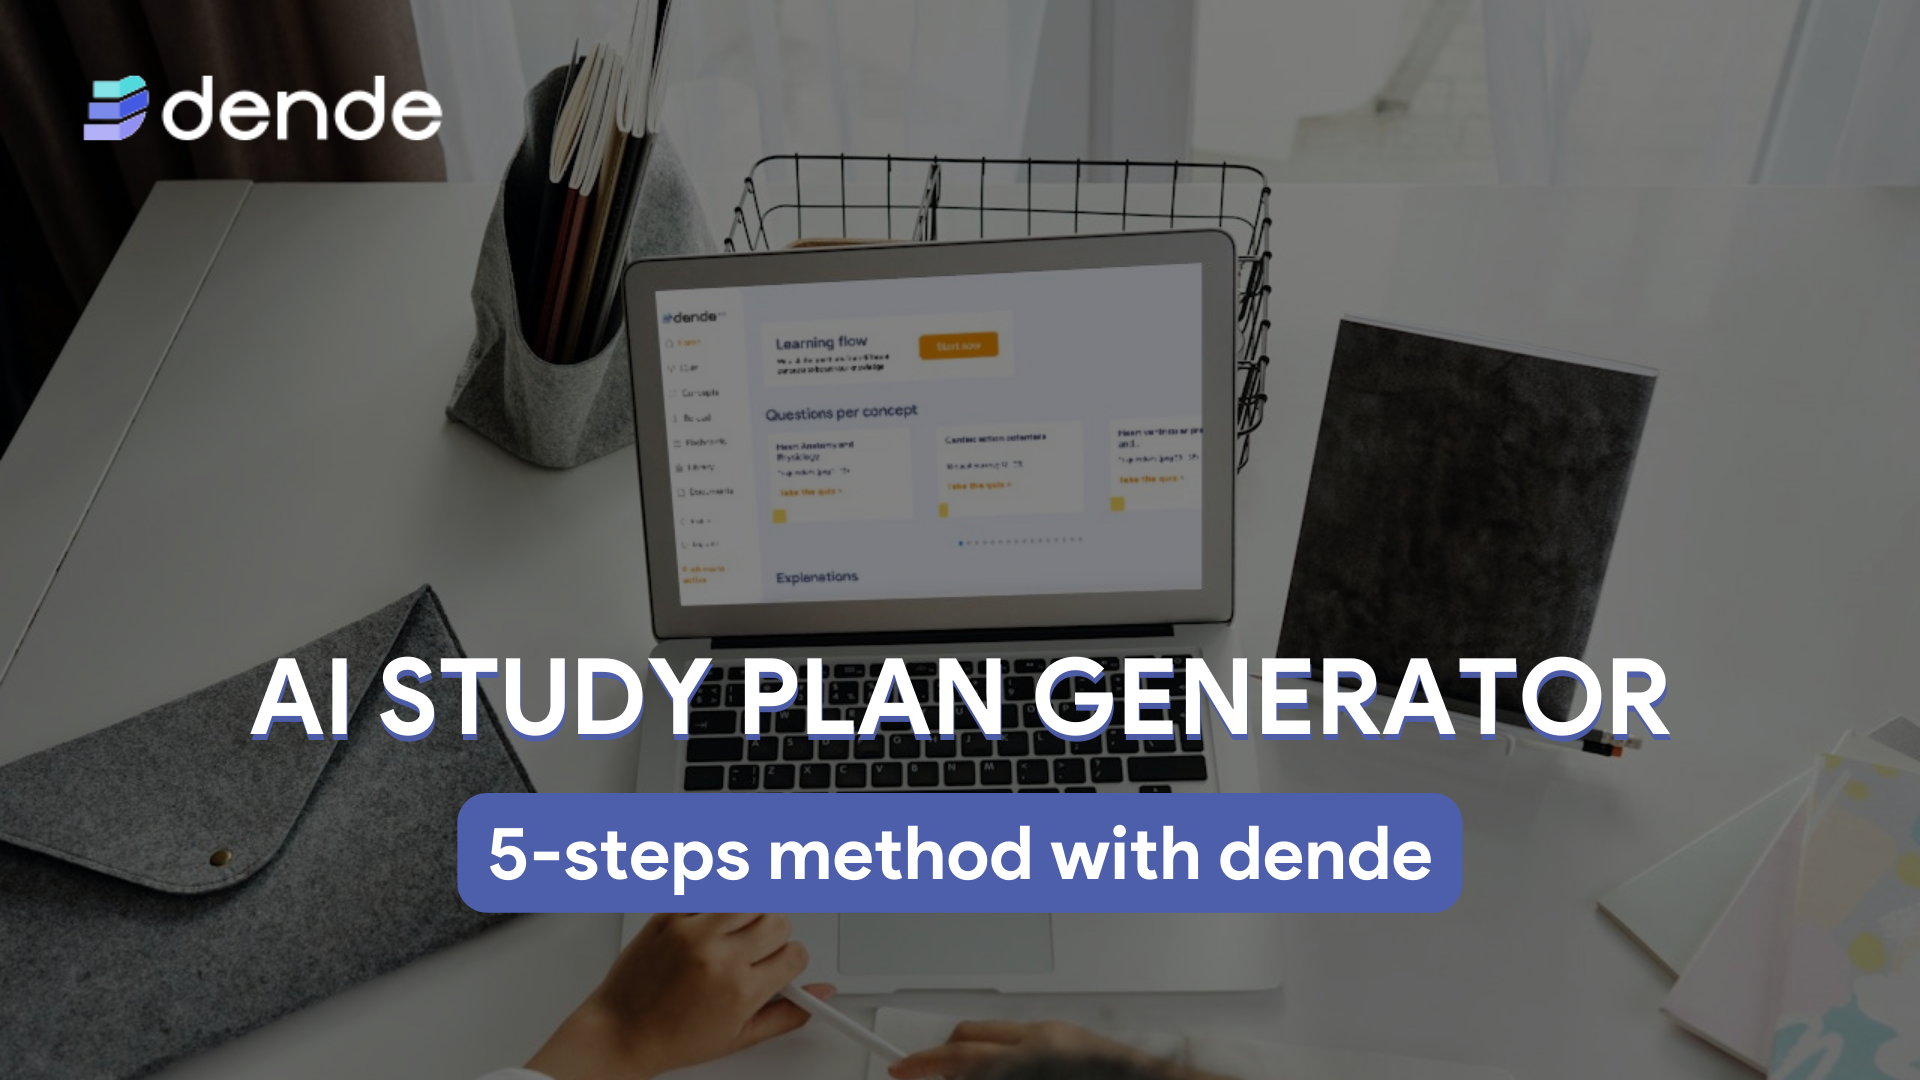 AI study plan generator: 5-steps method with dende